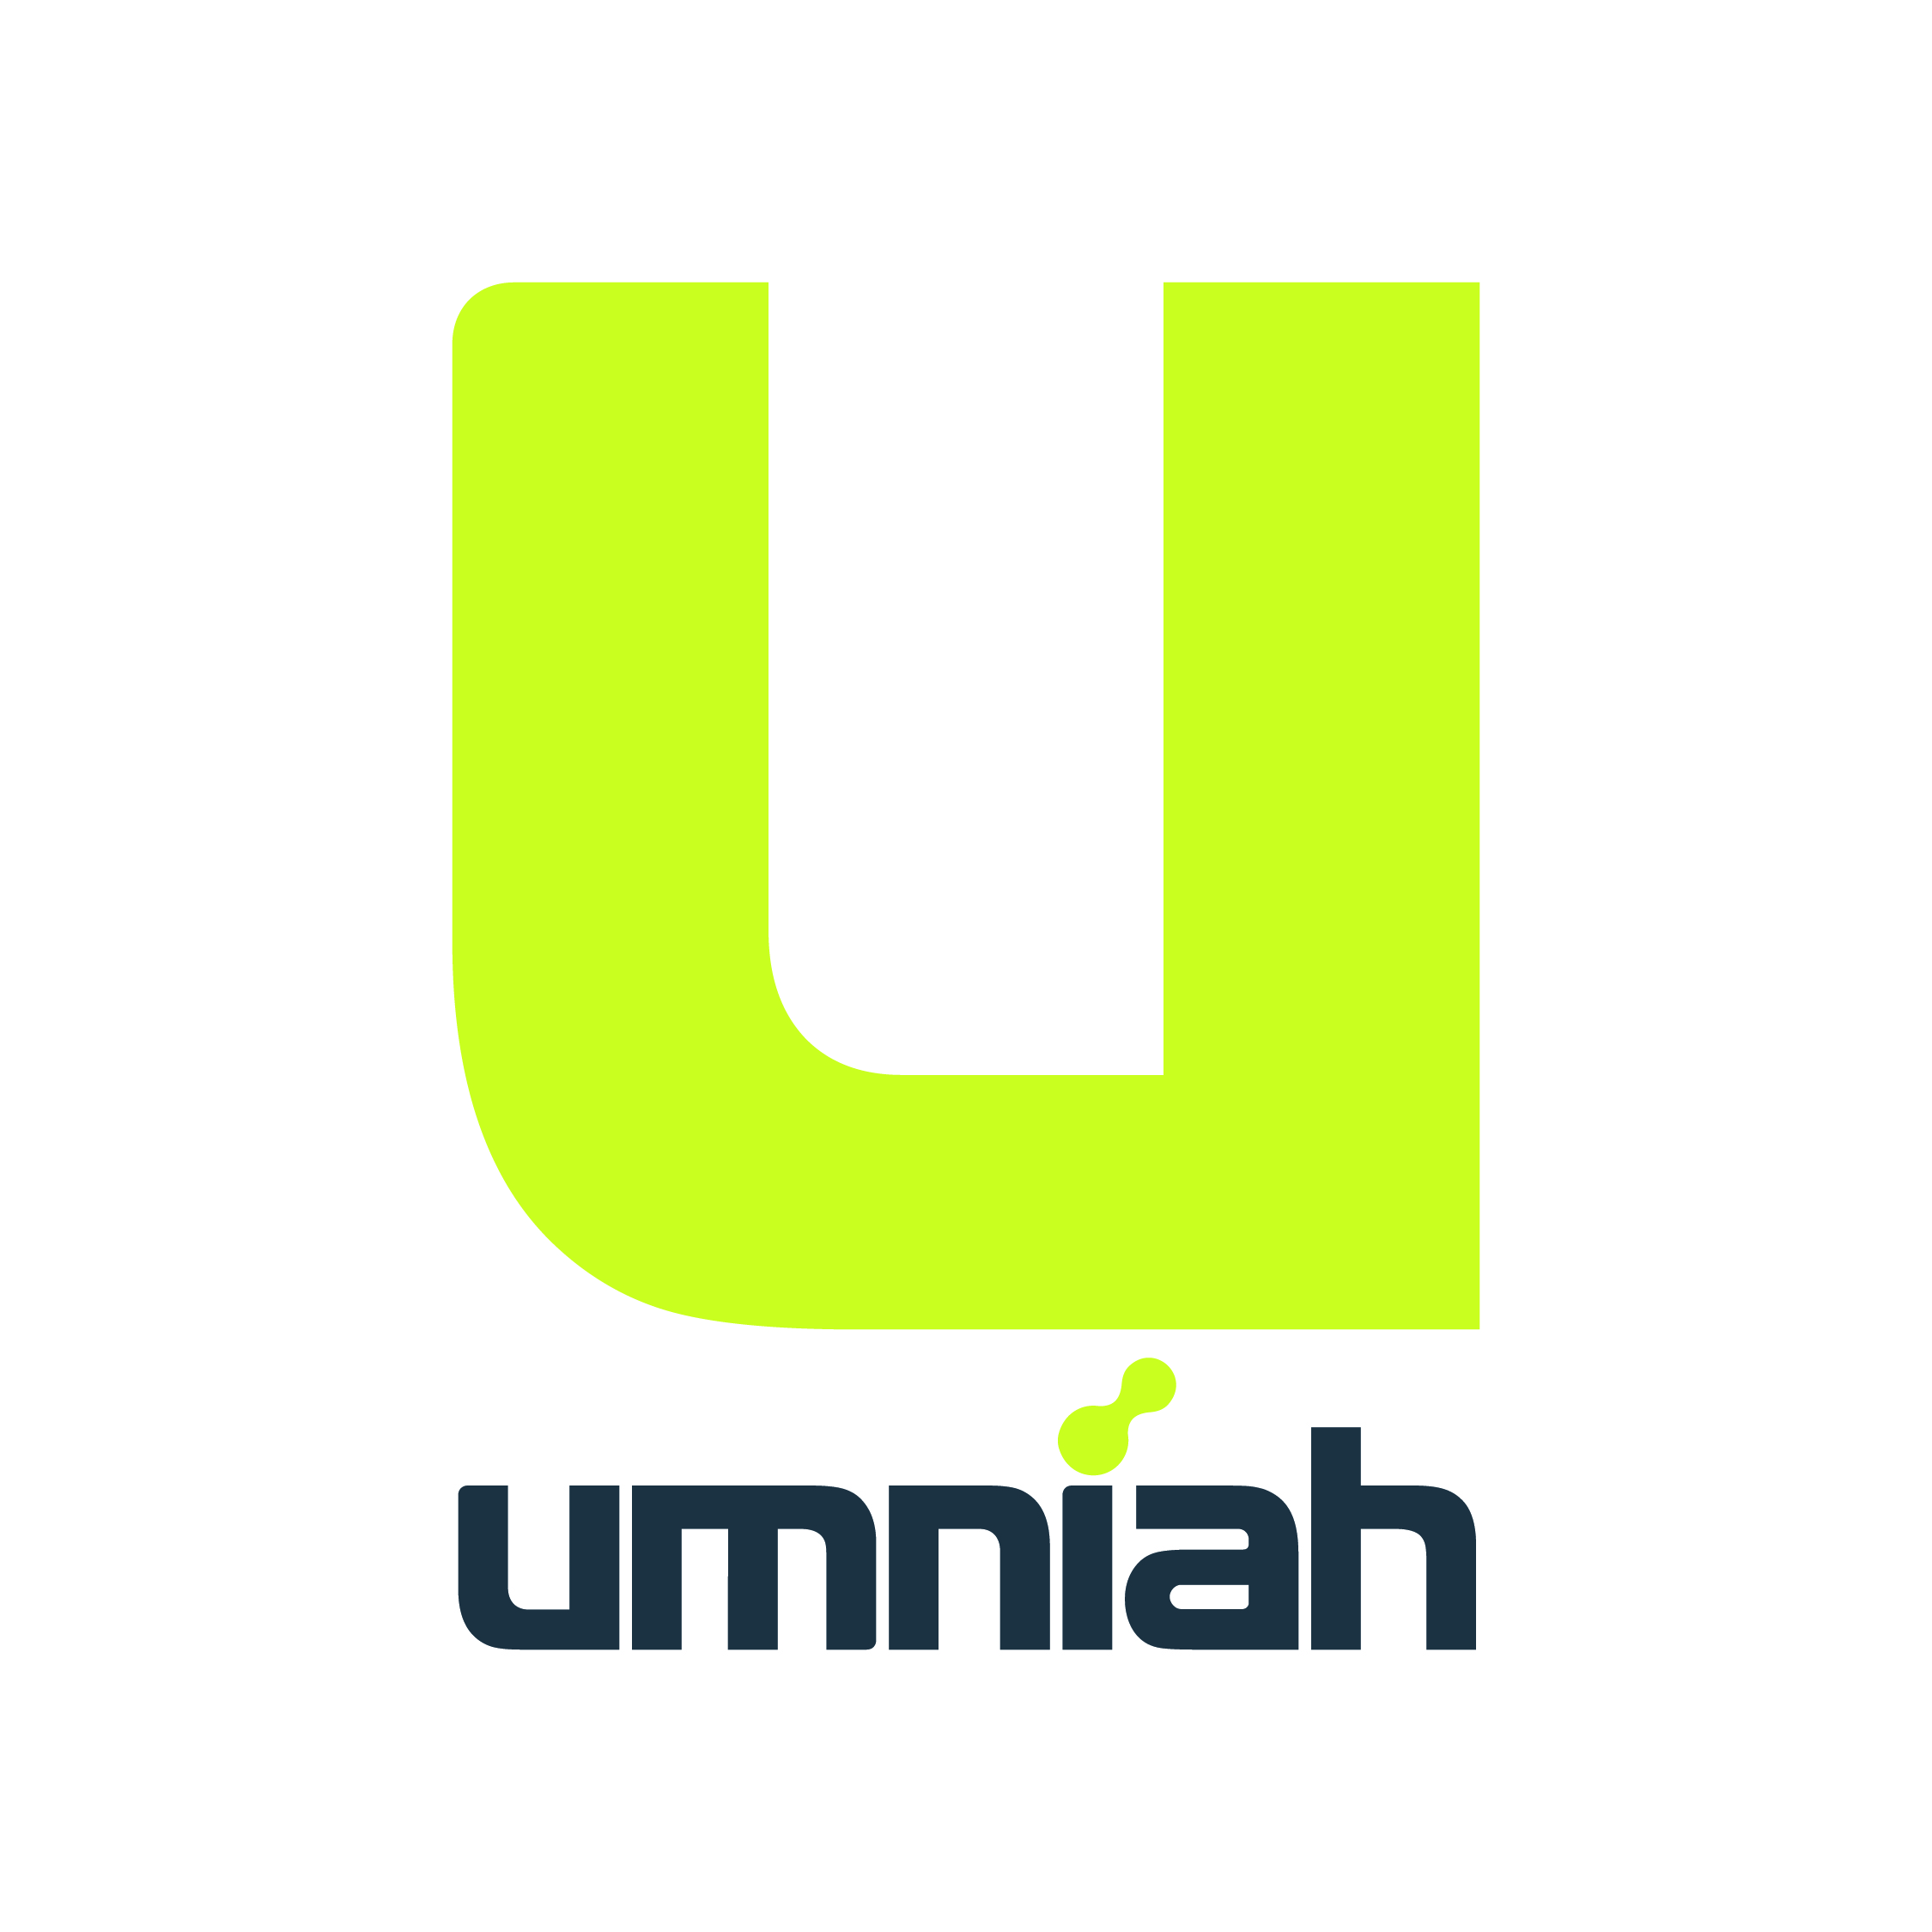 Umniah Celebrates Al Nashama and Donates 50,000 Dinars in Celebration of the Historic Achievement